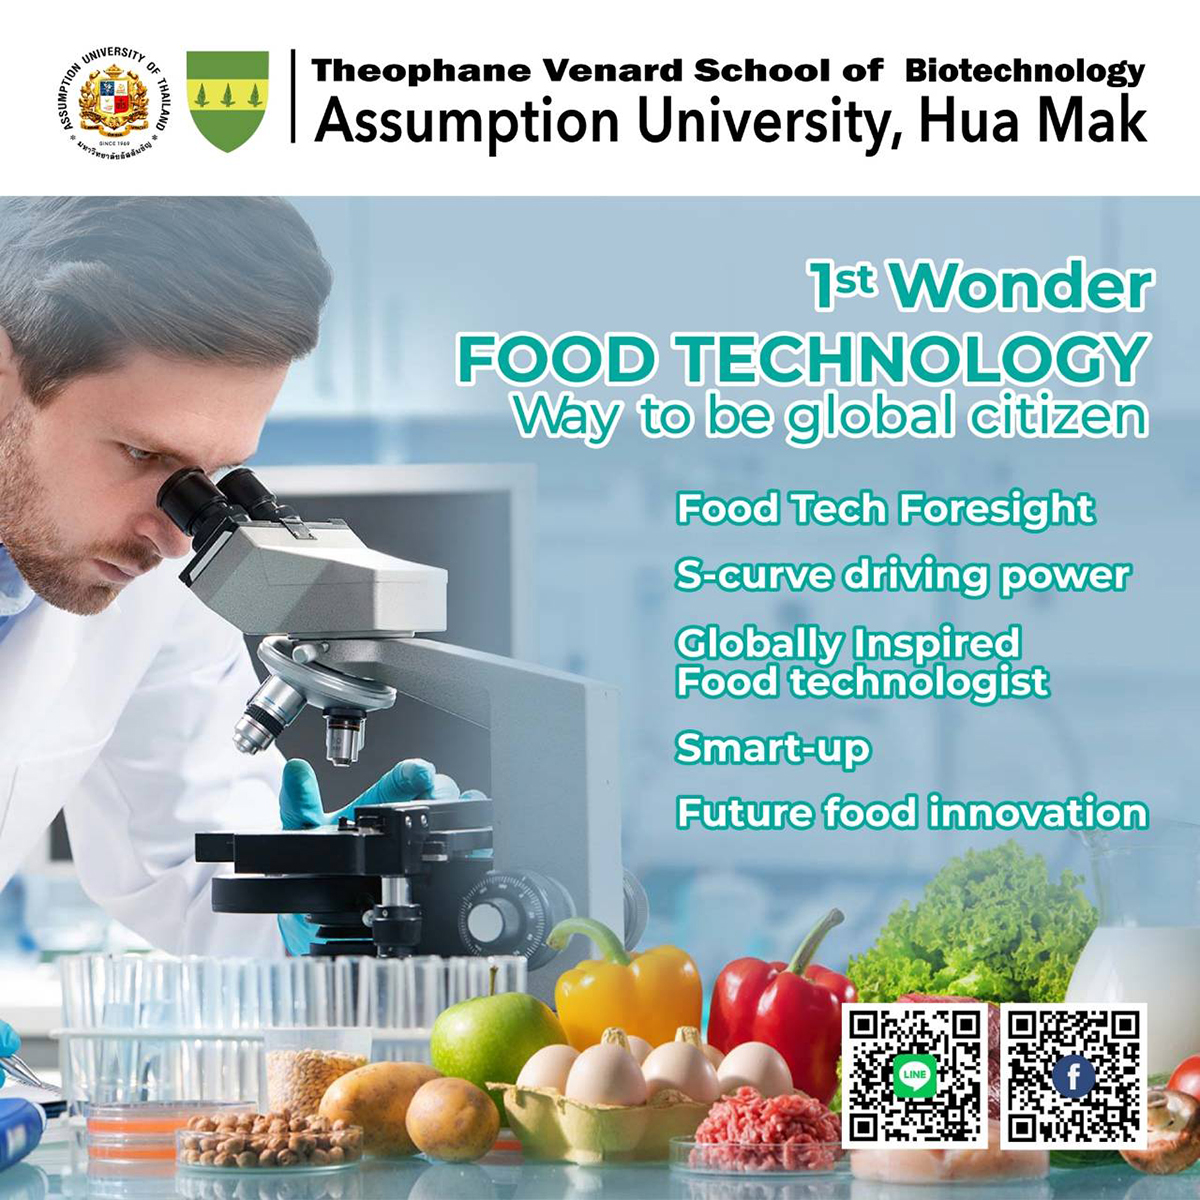 1st Wonder: Food Technology